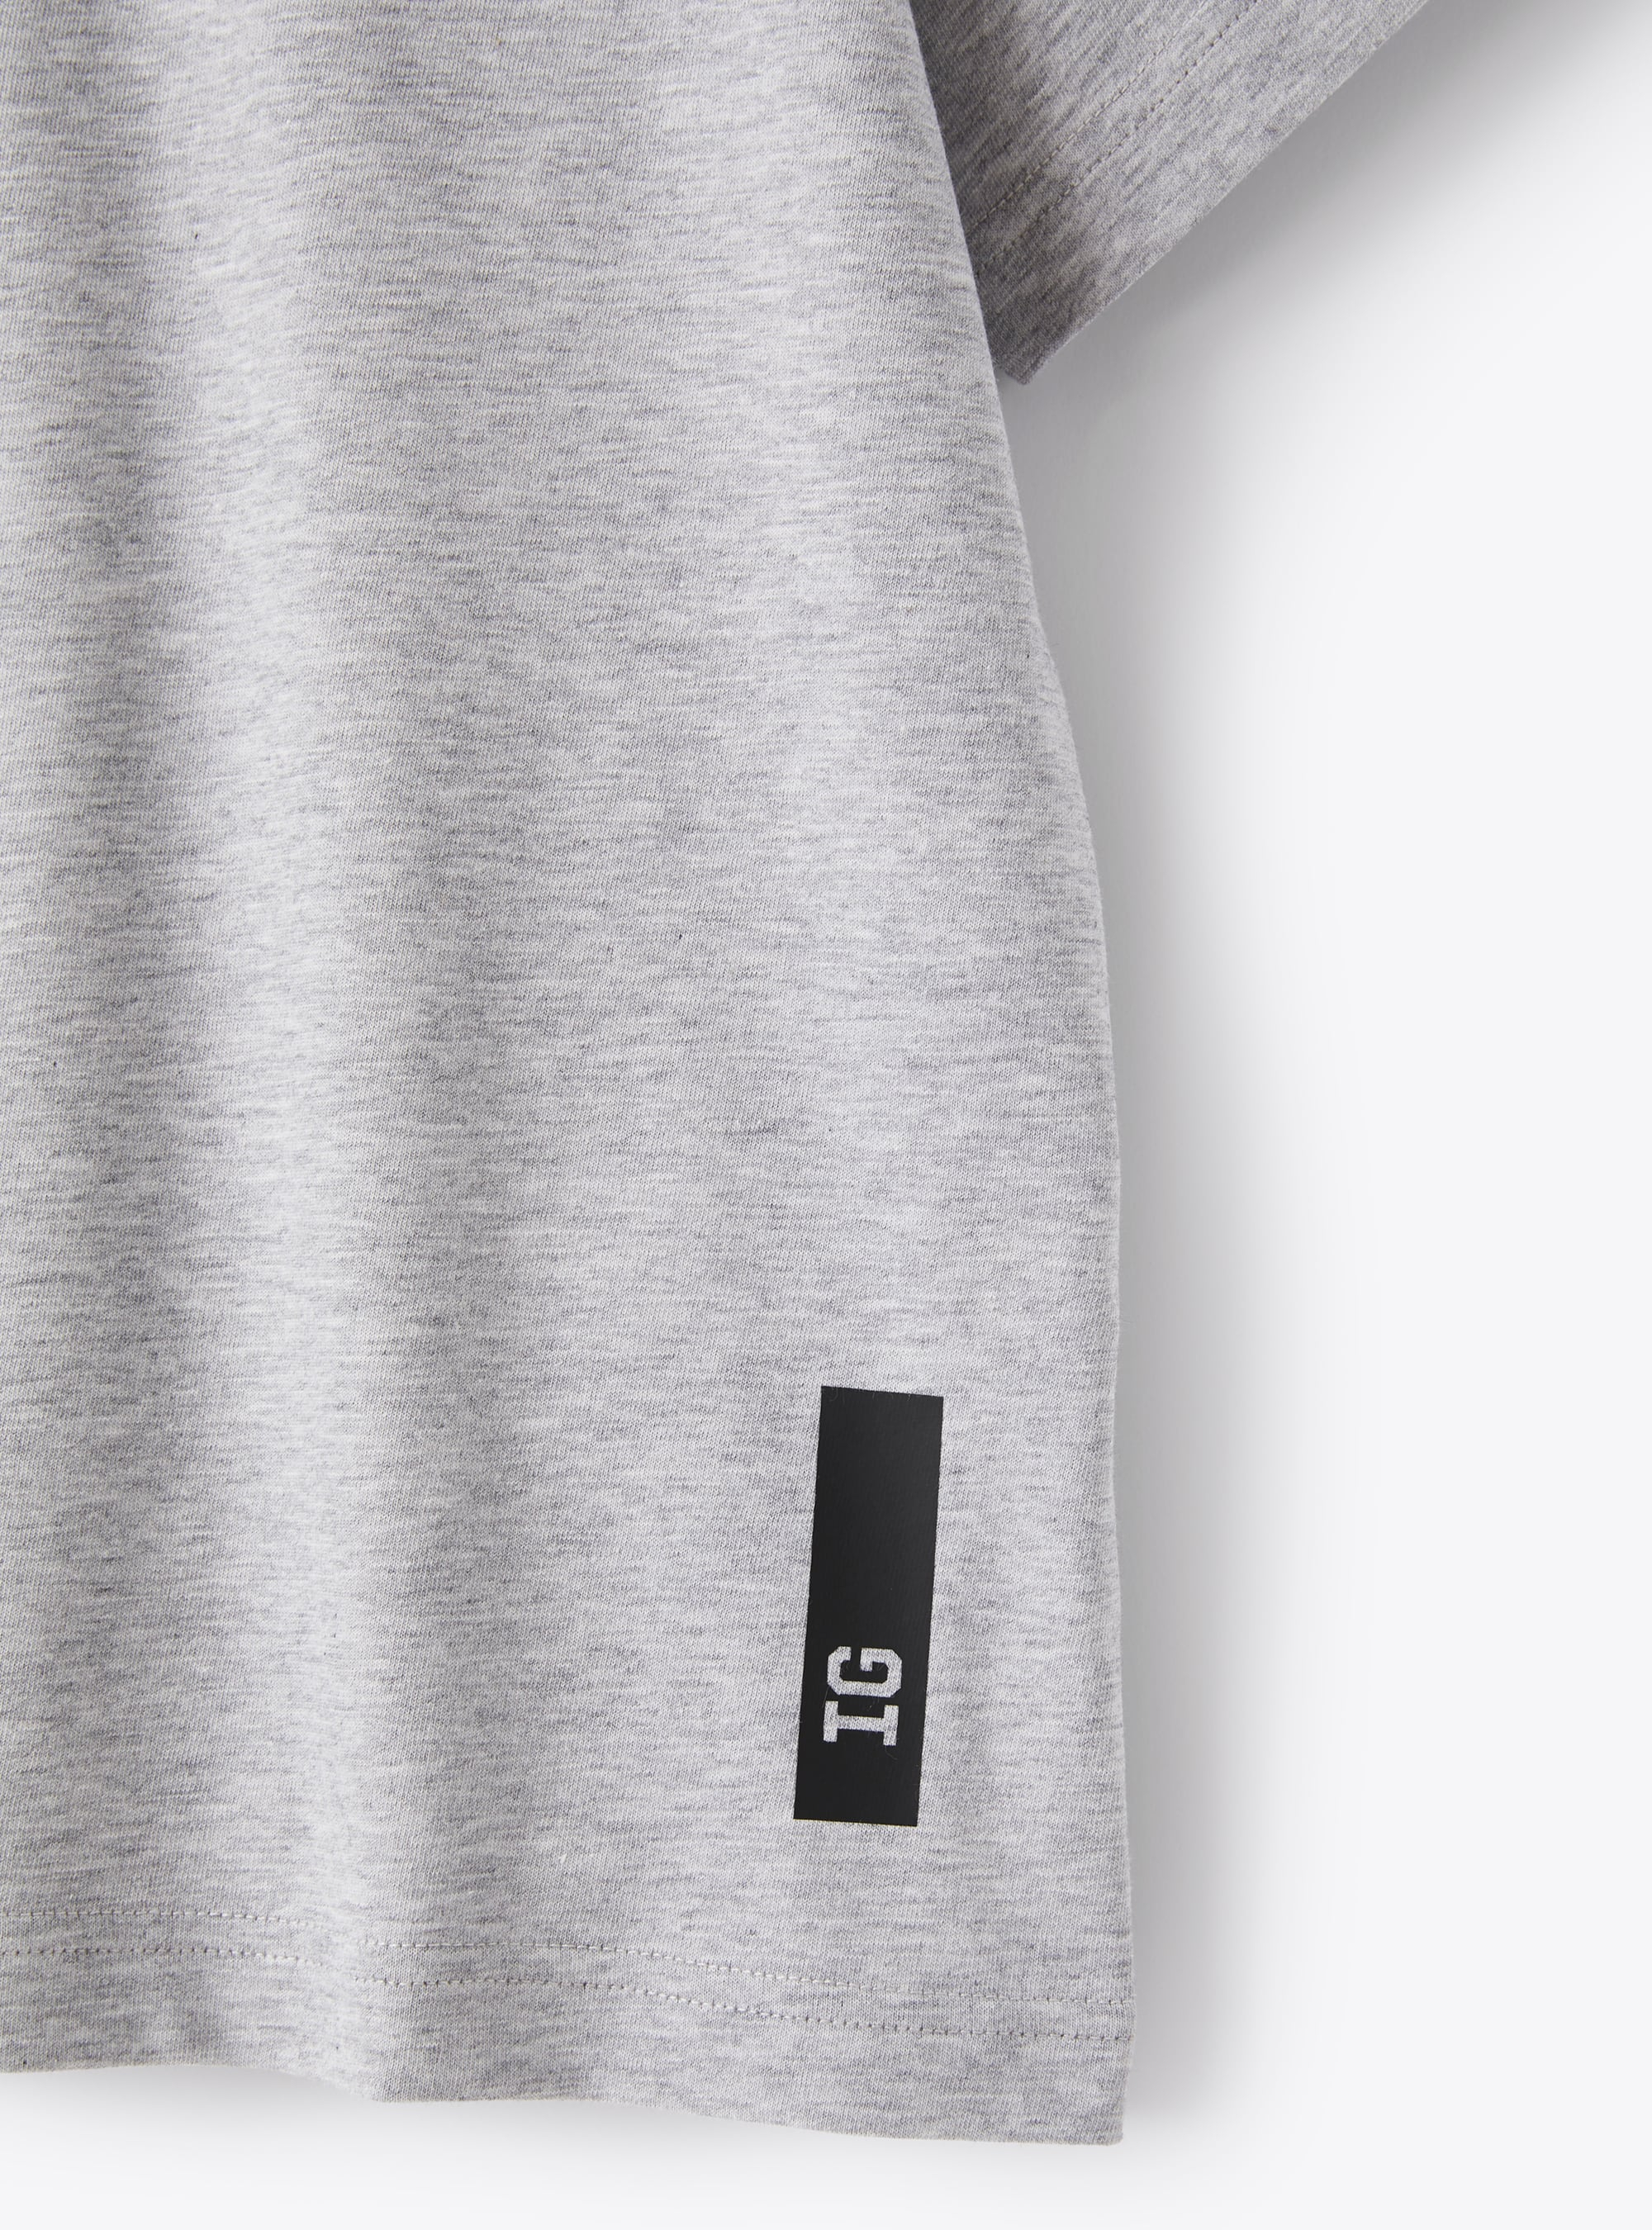 T-Shirt aus grau meliertem Baumwoll-Jersey - Grau | Il Gufo